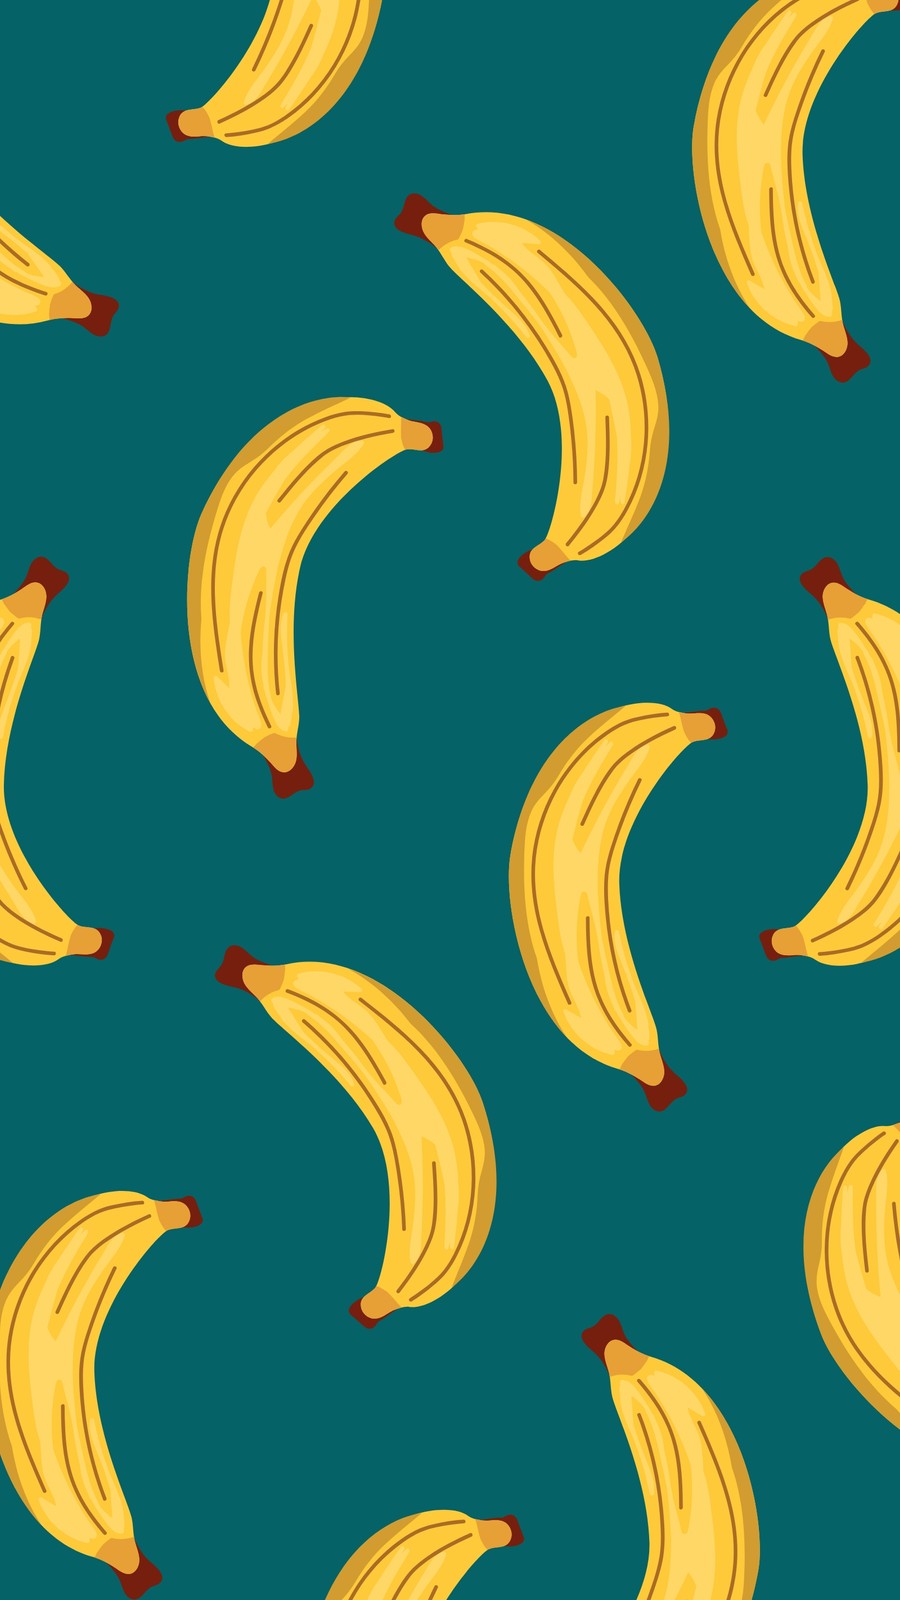 banana template